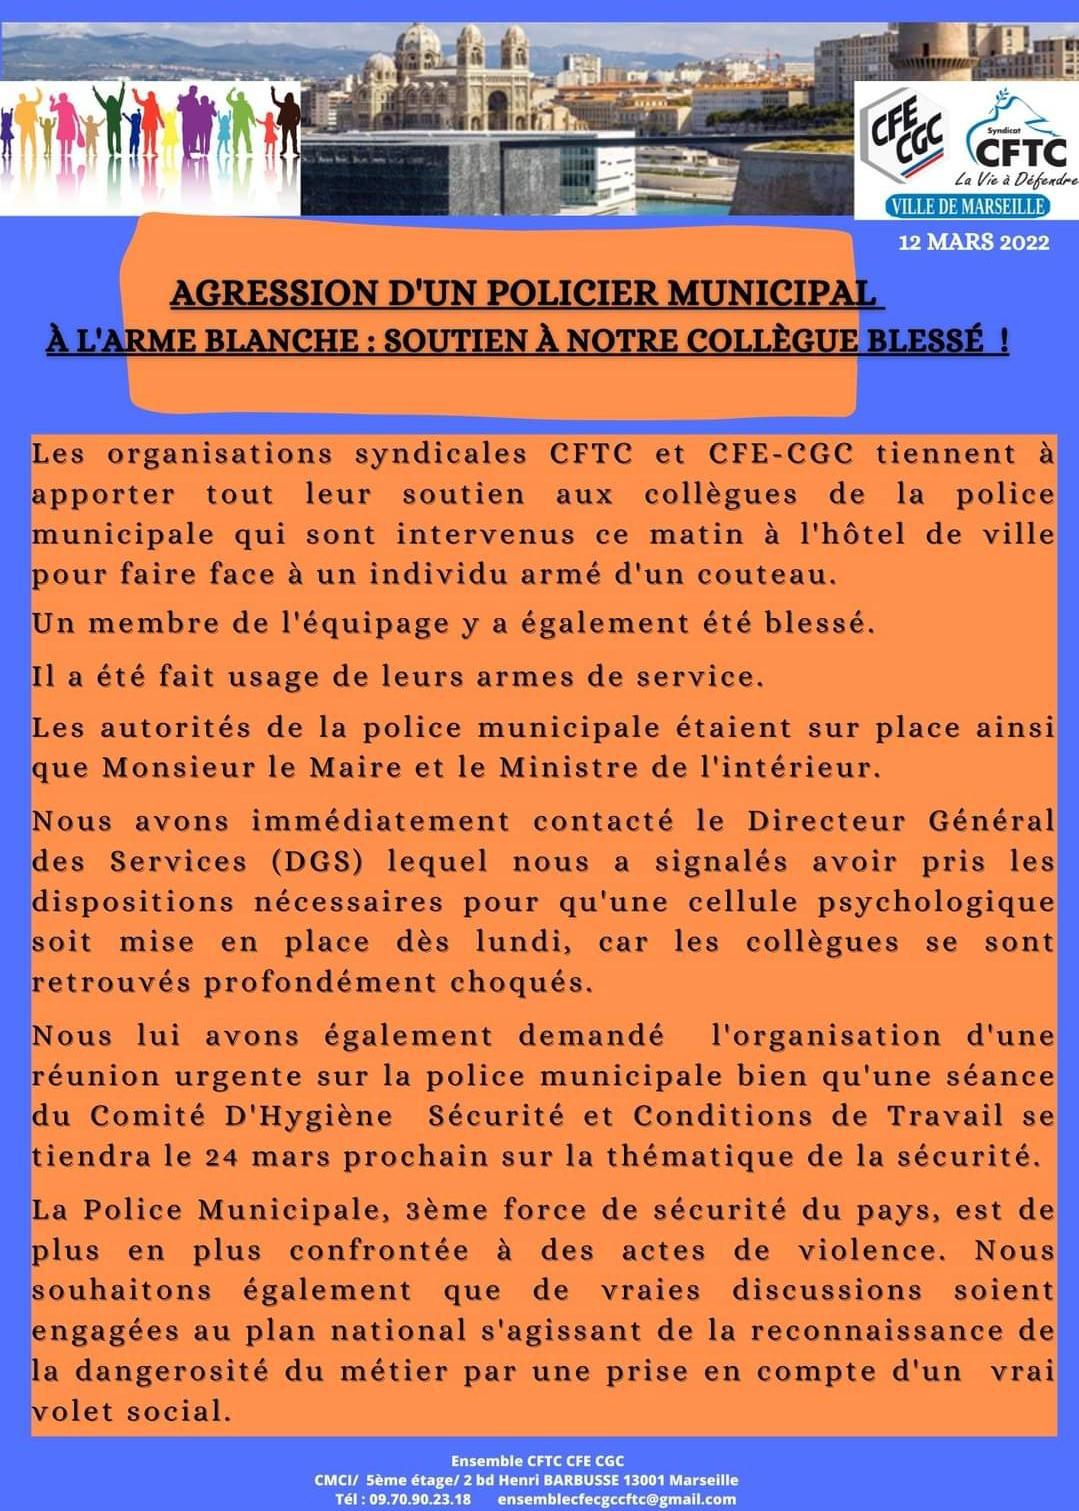 AGRESSION D'UN POLICIER MUNICIPAL A MARSEILLE CE MATIN